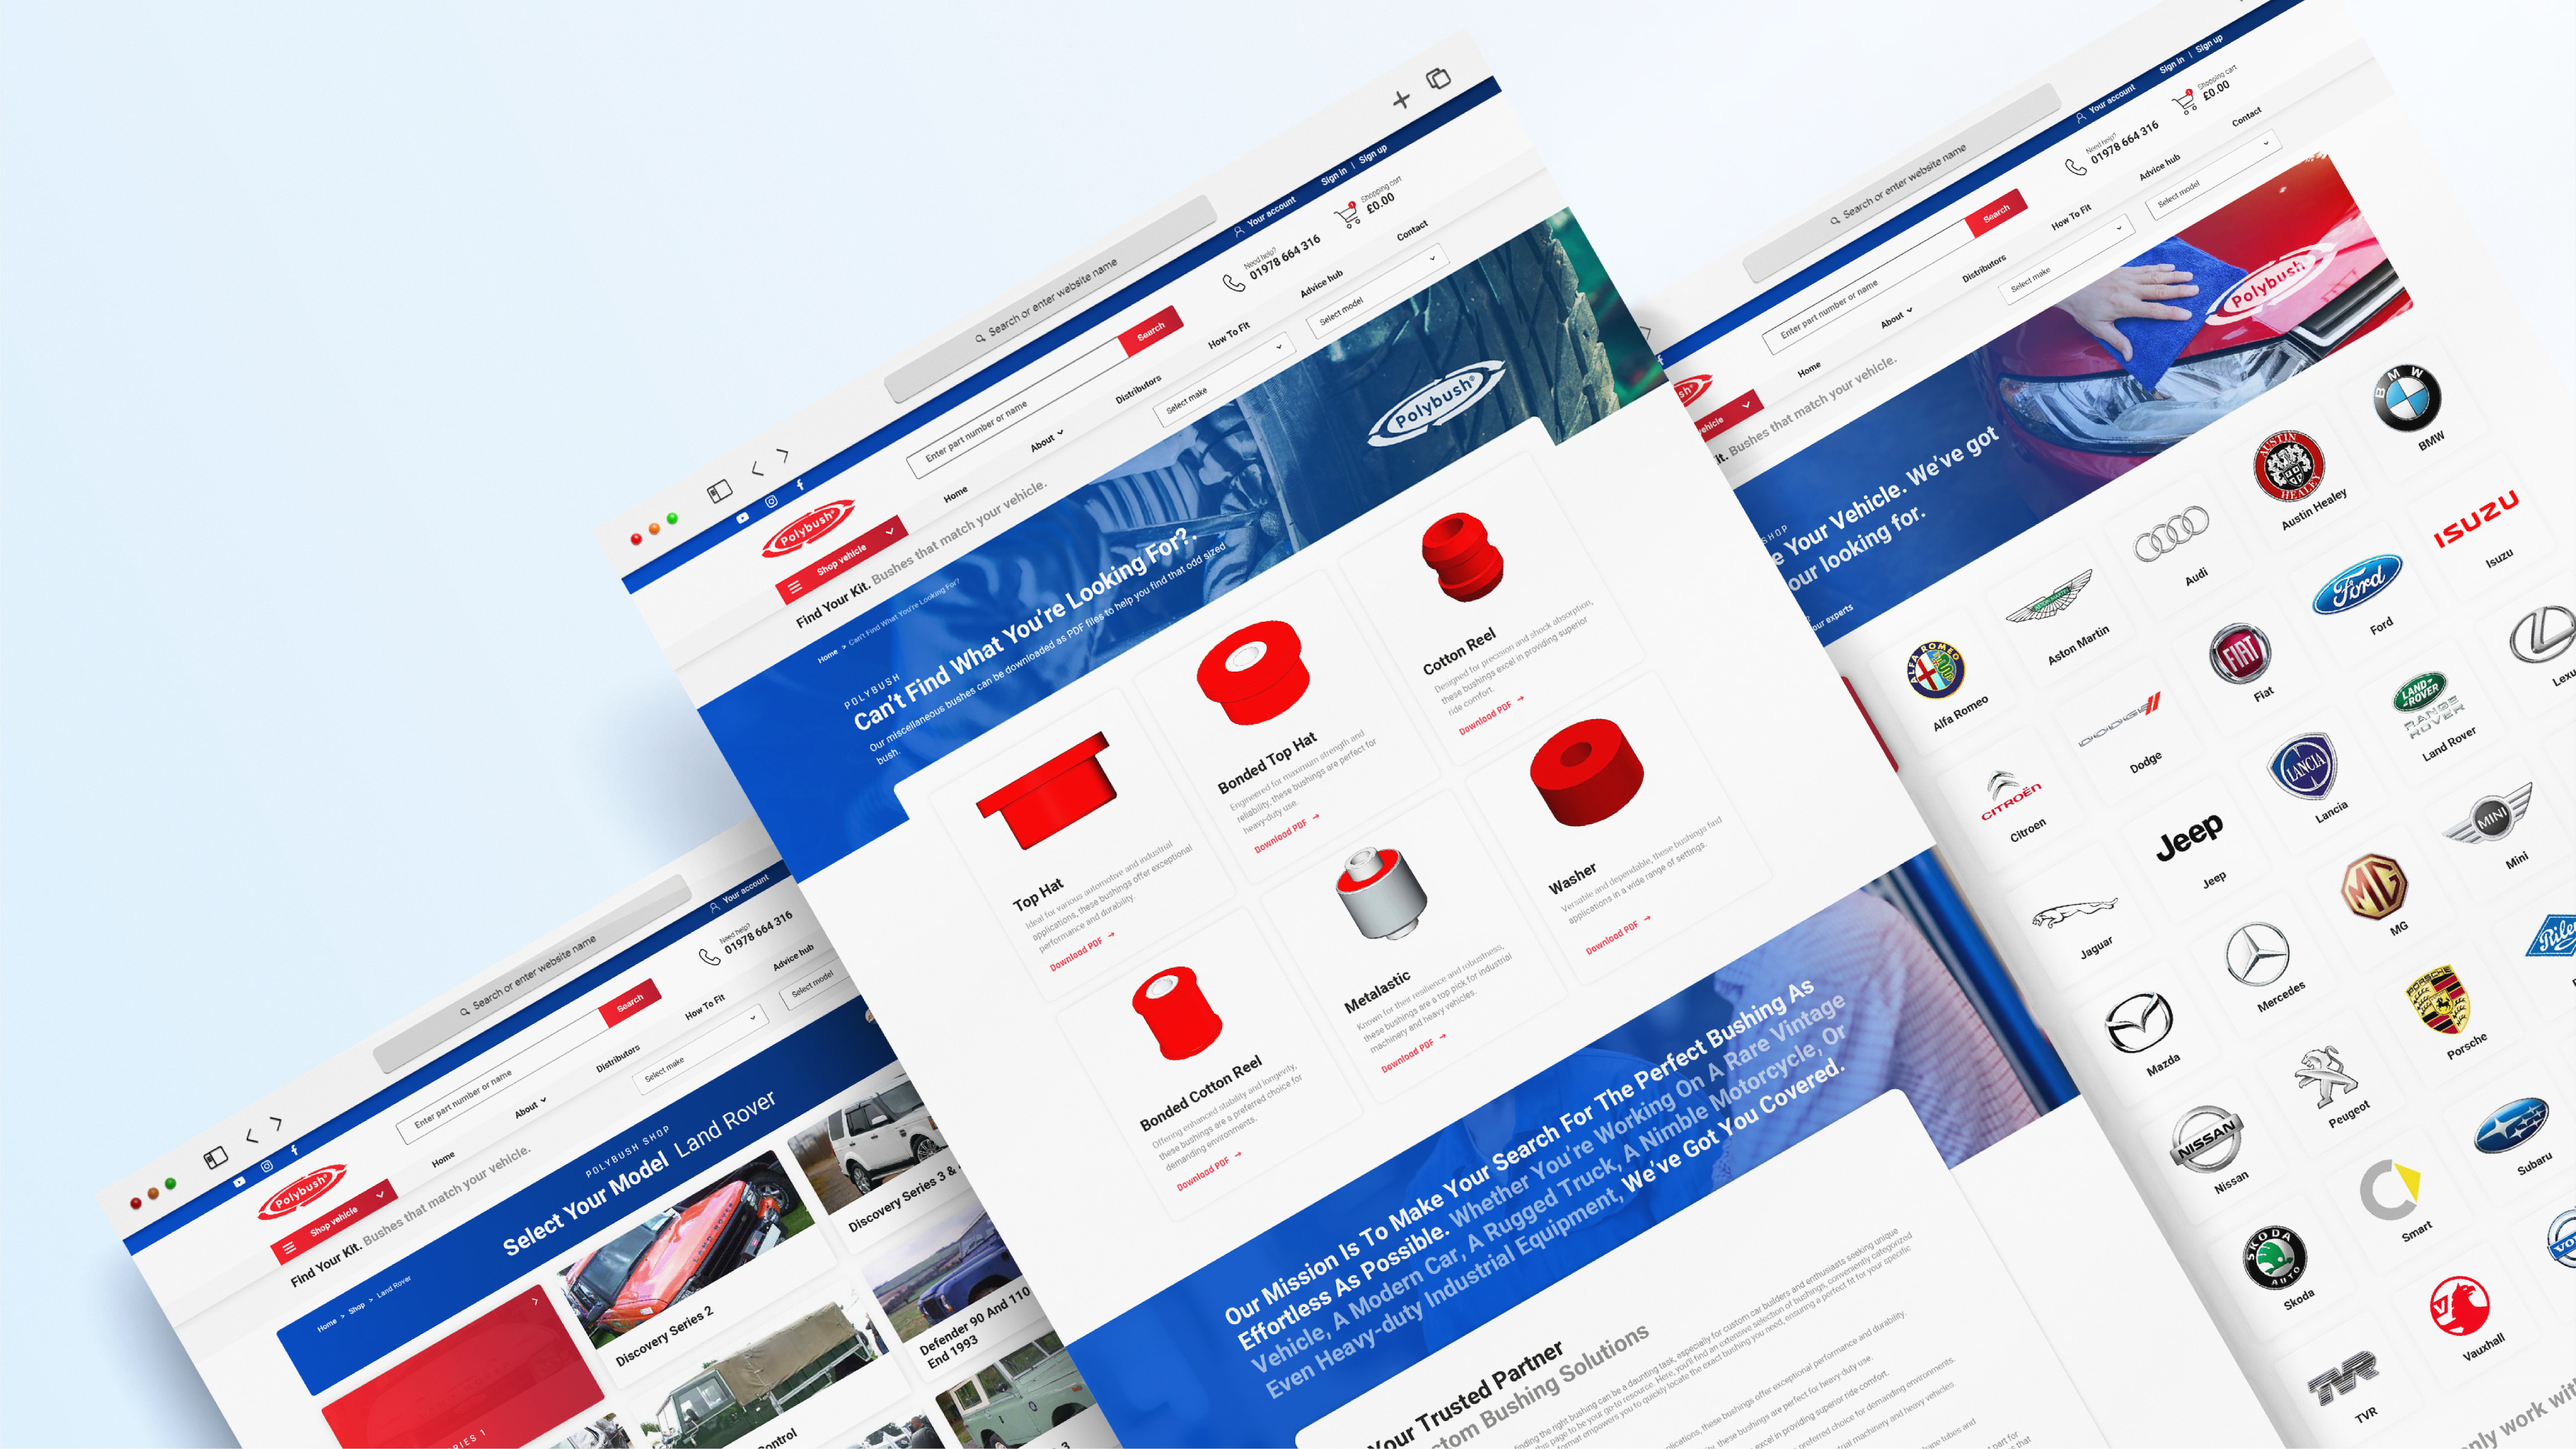 Polybush – Website Design